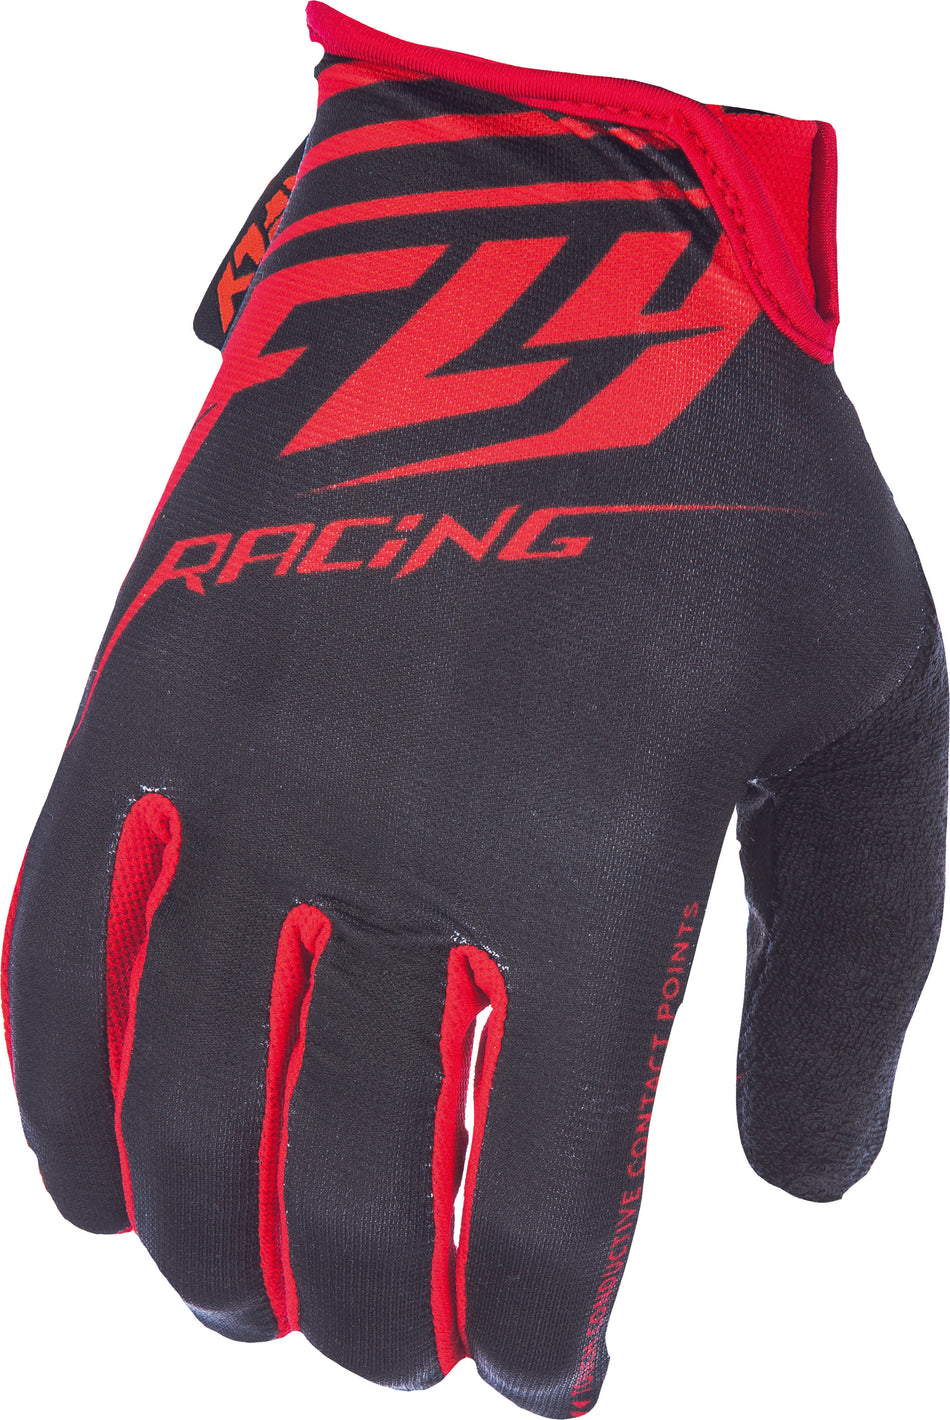 FLY RACING Media Gloves Black/Red Sz 12 350-07212